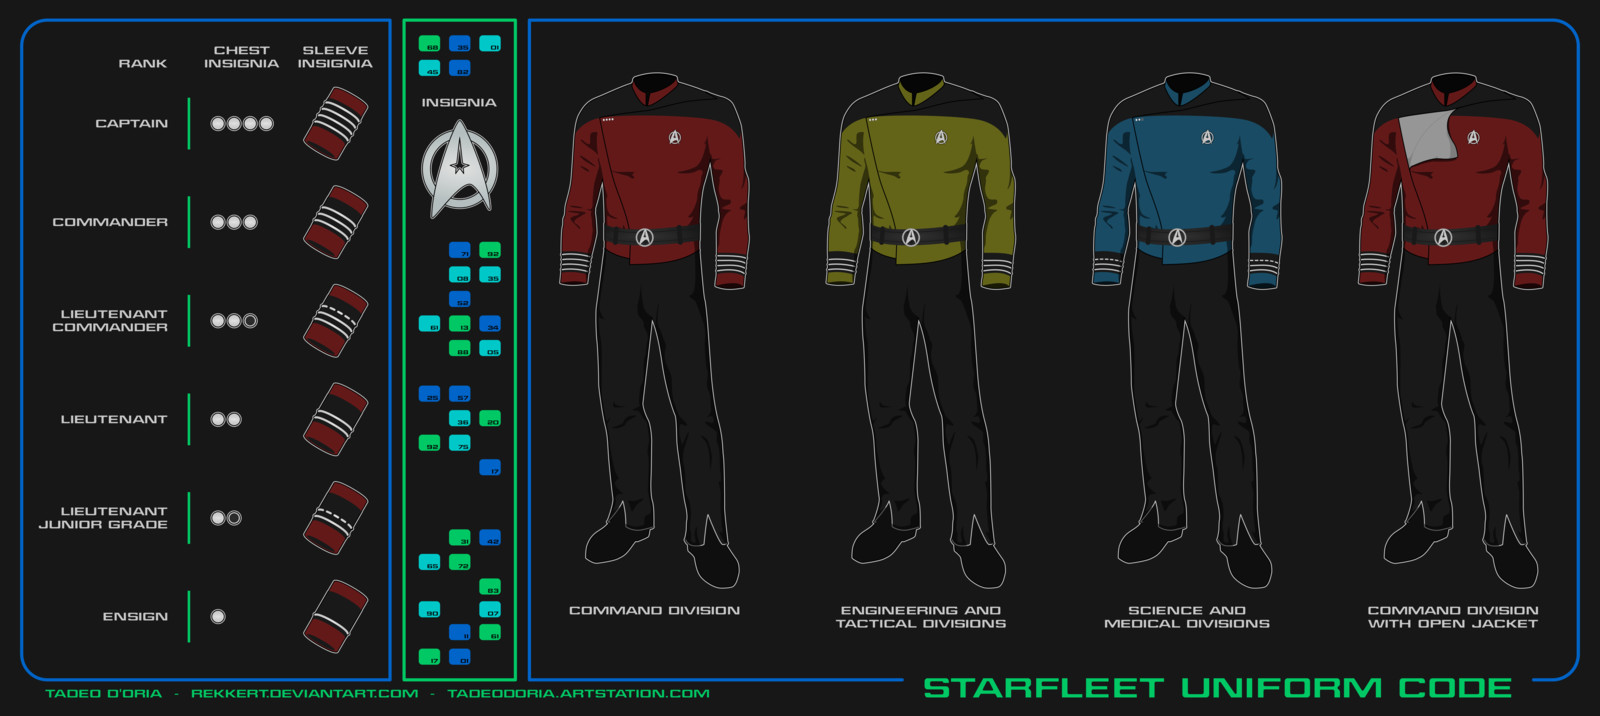 Star Trek Early 24th Century Uniforms